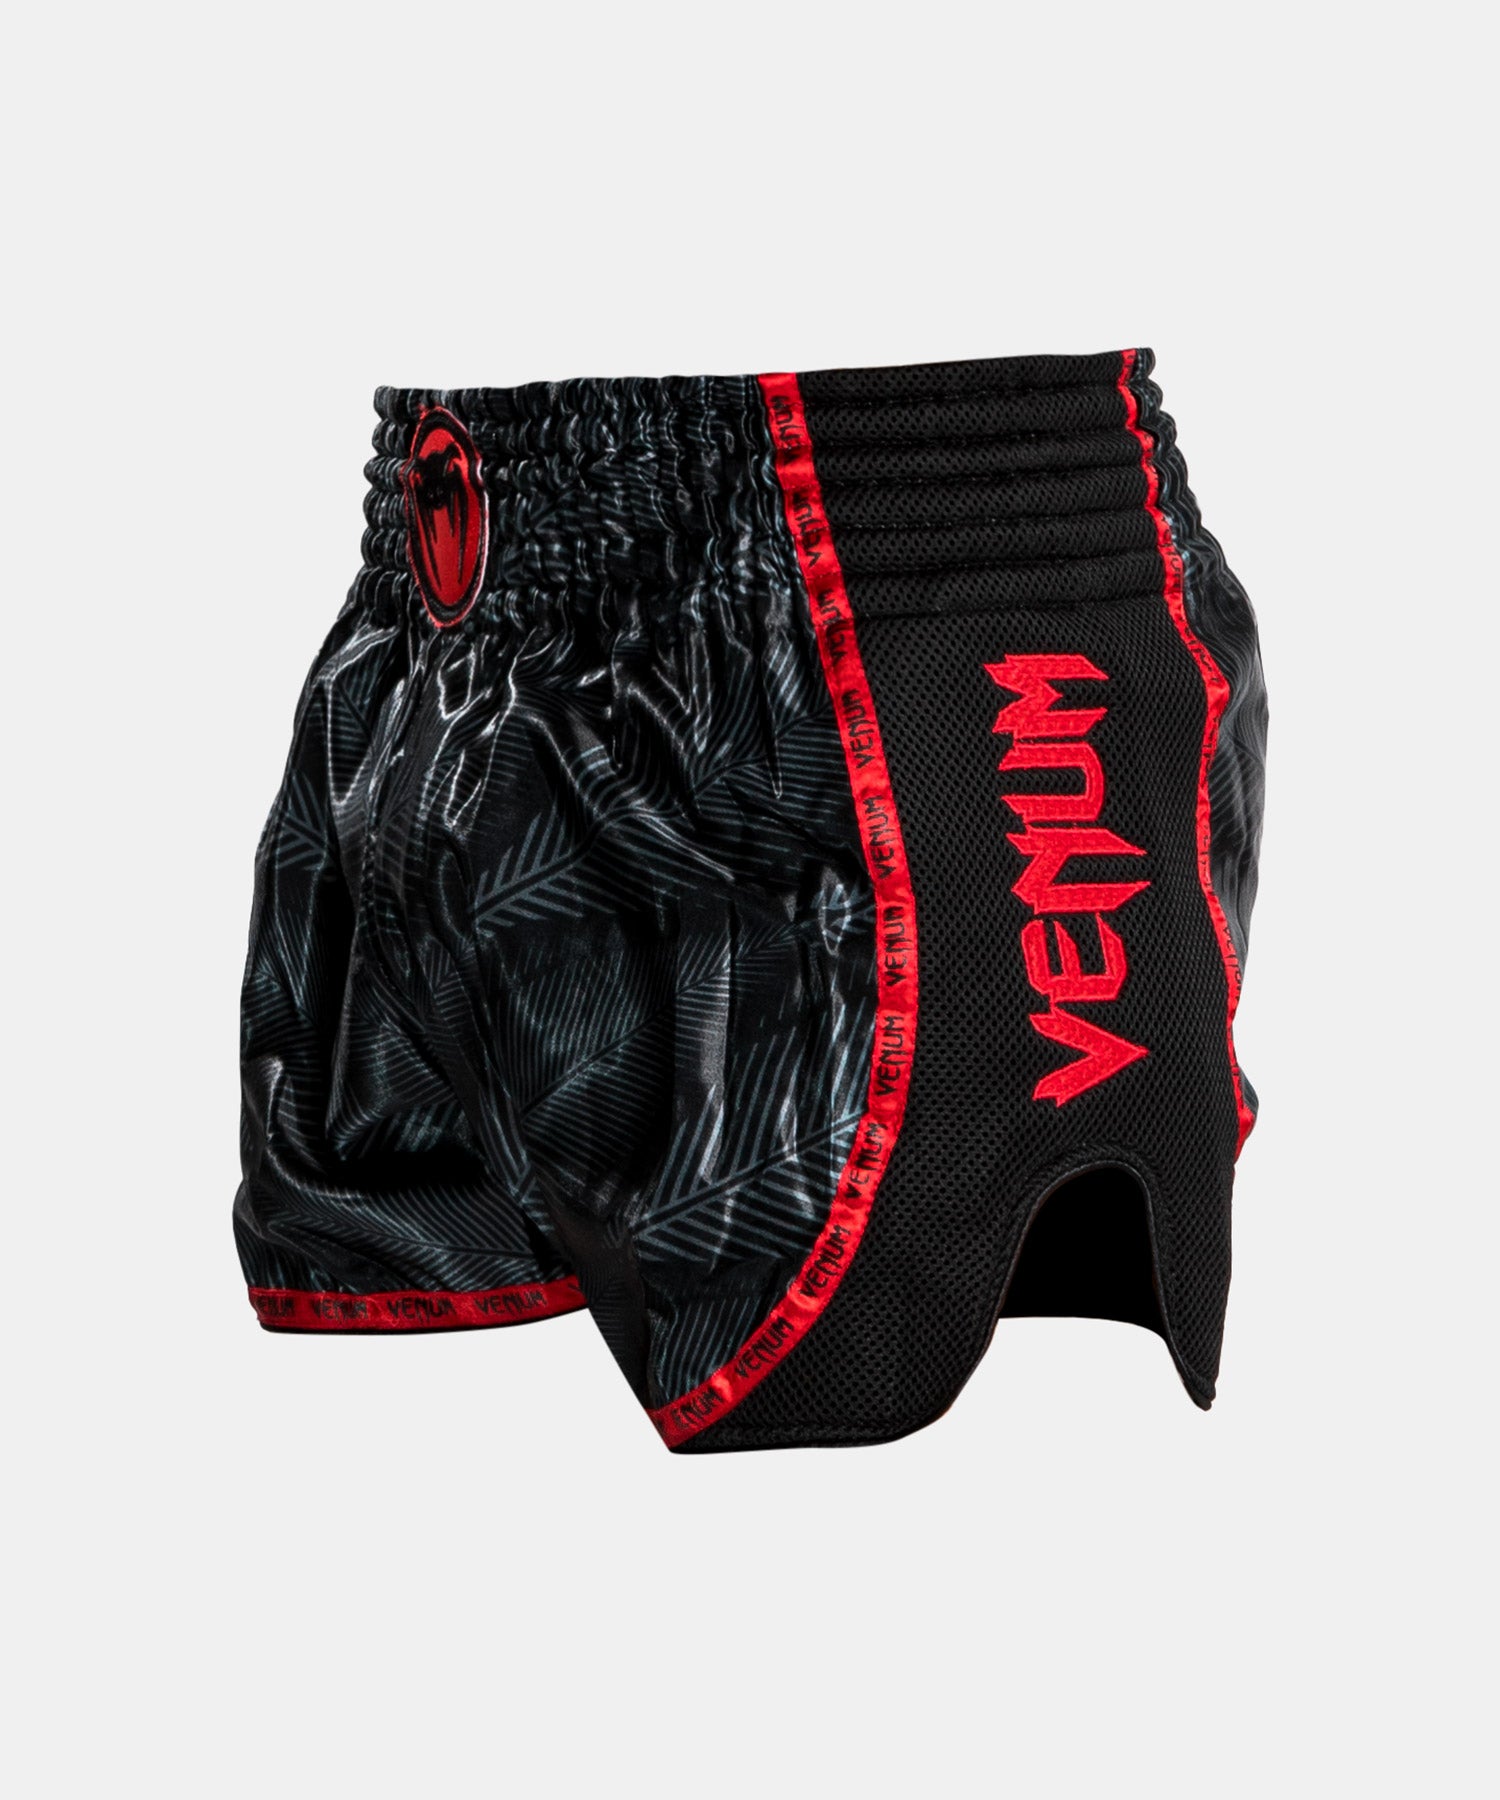 Pantalones De Boxeo Venum Phantom negro / rojo